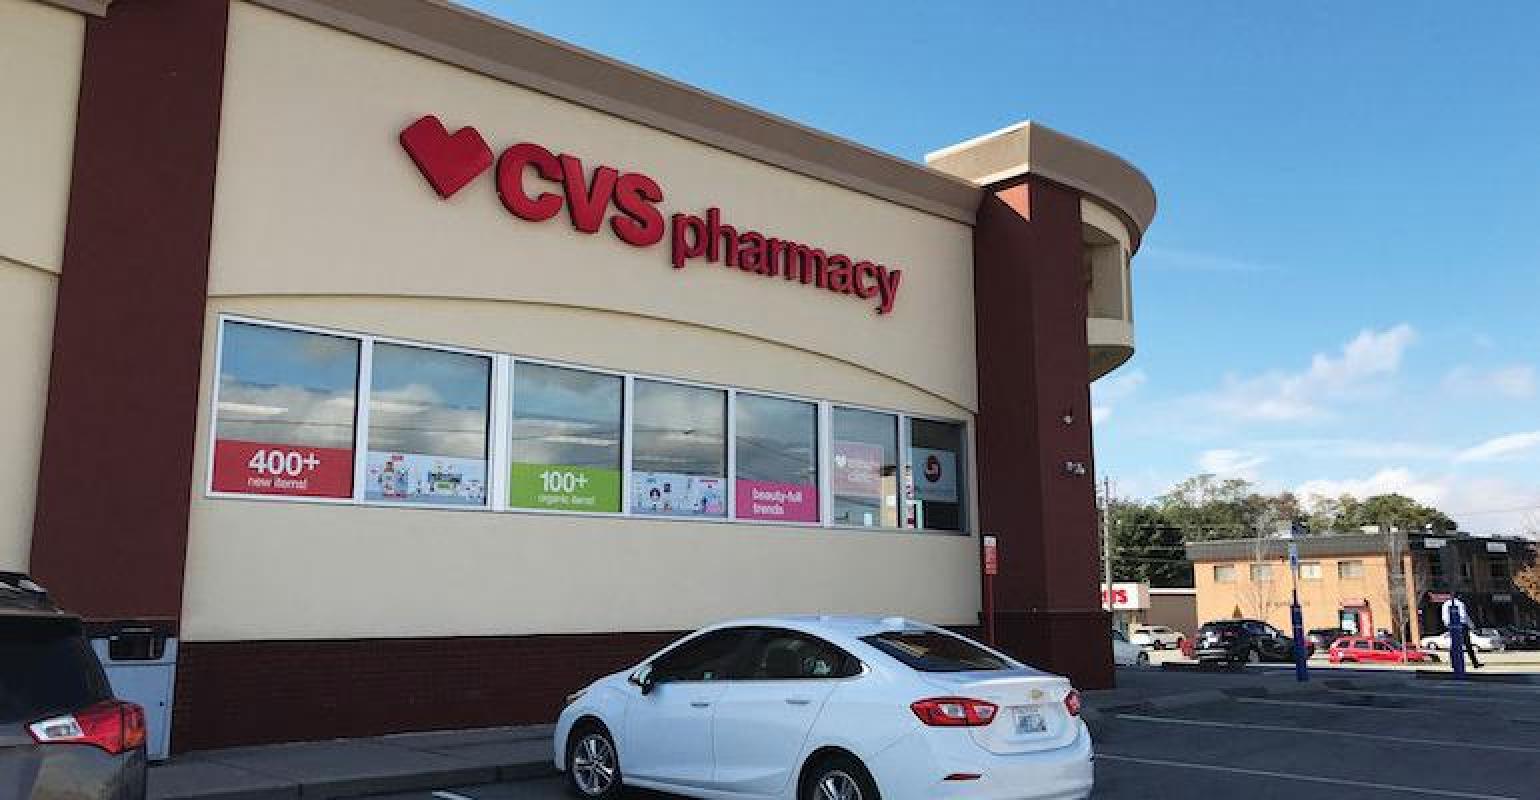 Customer Reviews: CVS Health Digital Body Scale - CVS Pharmacy